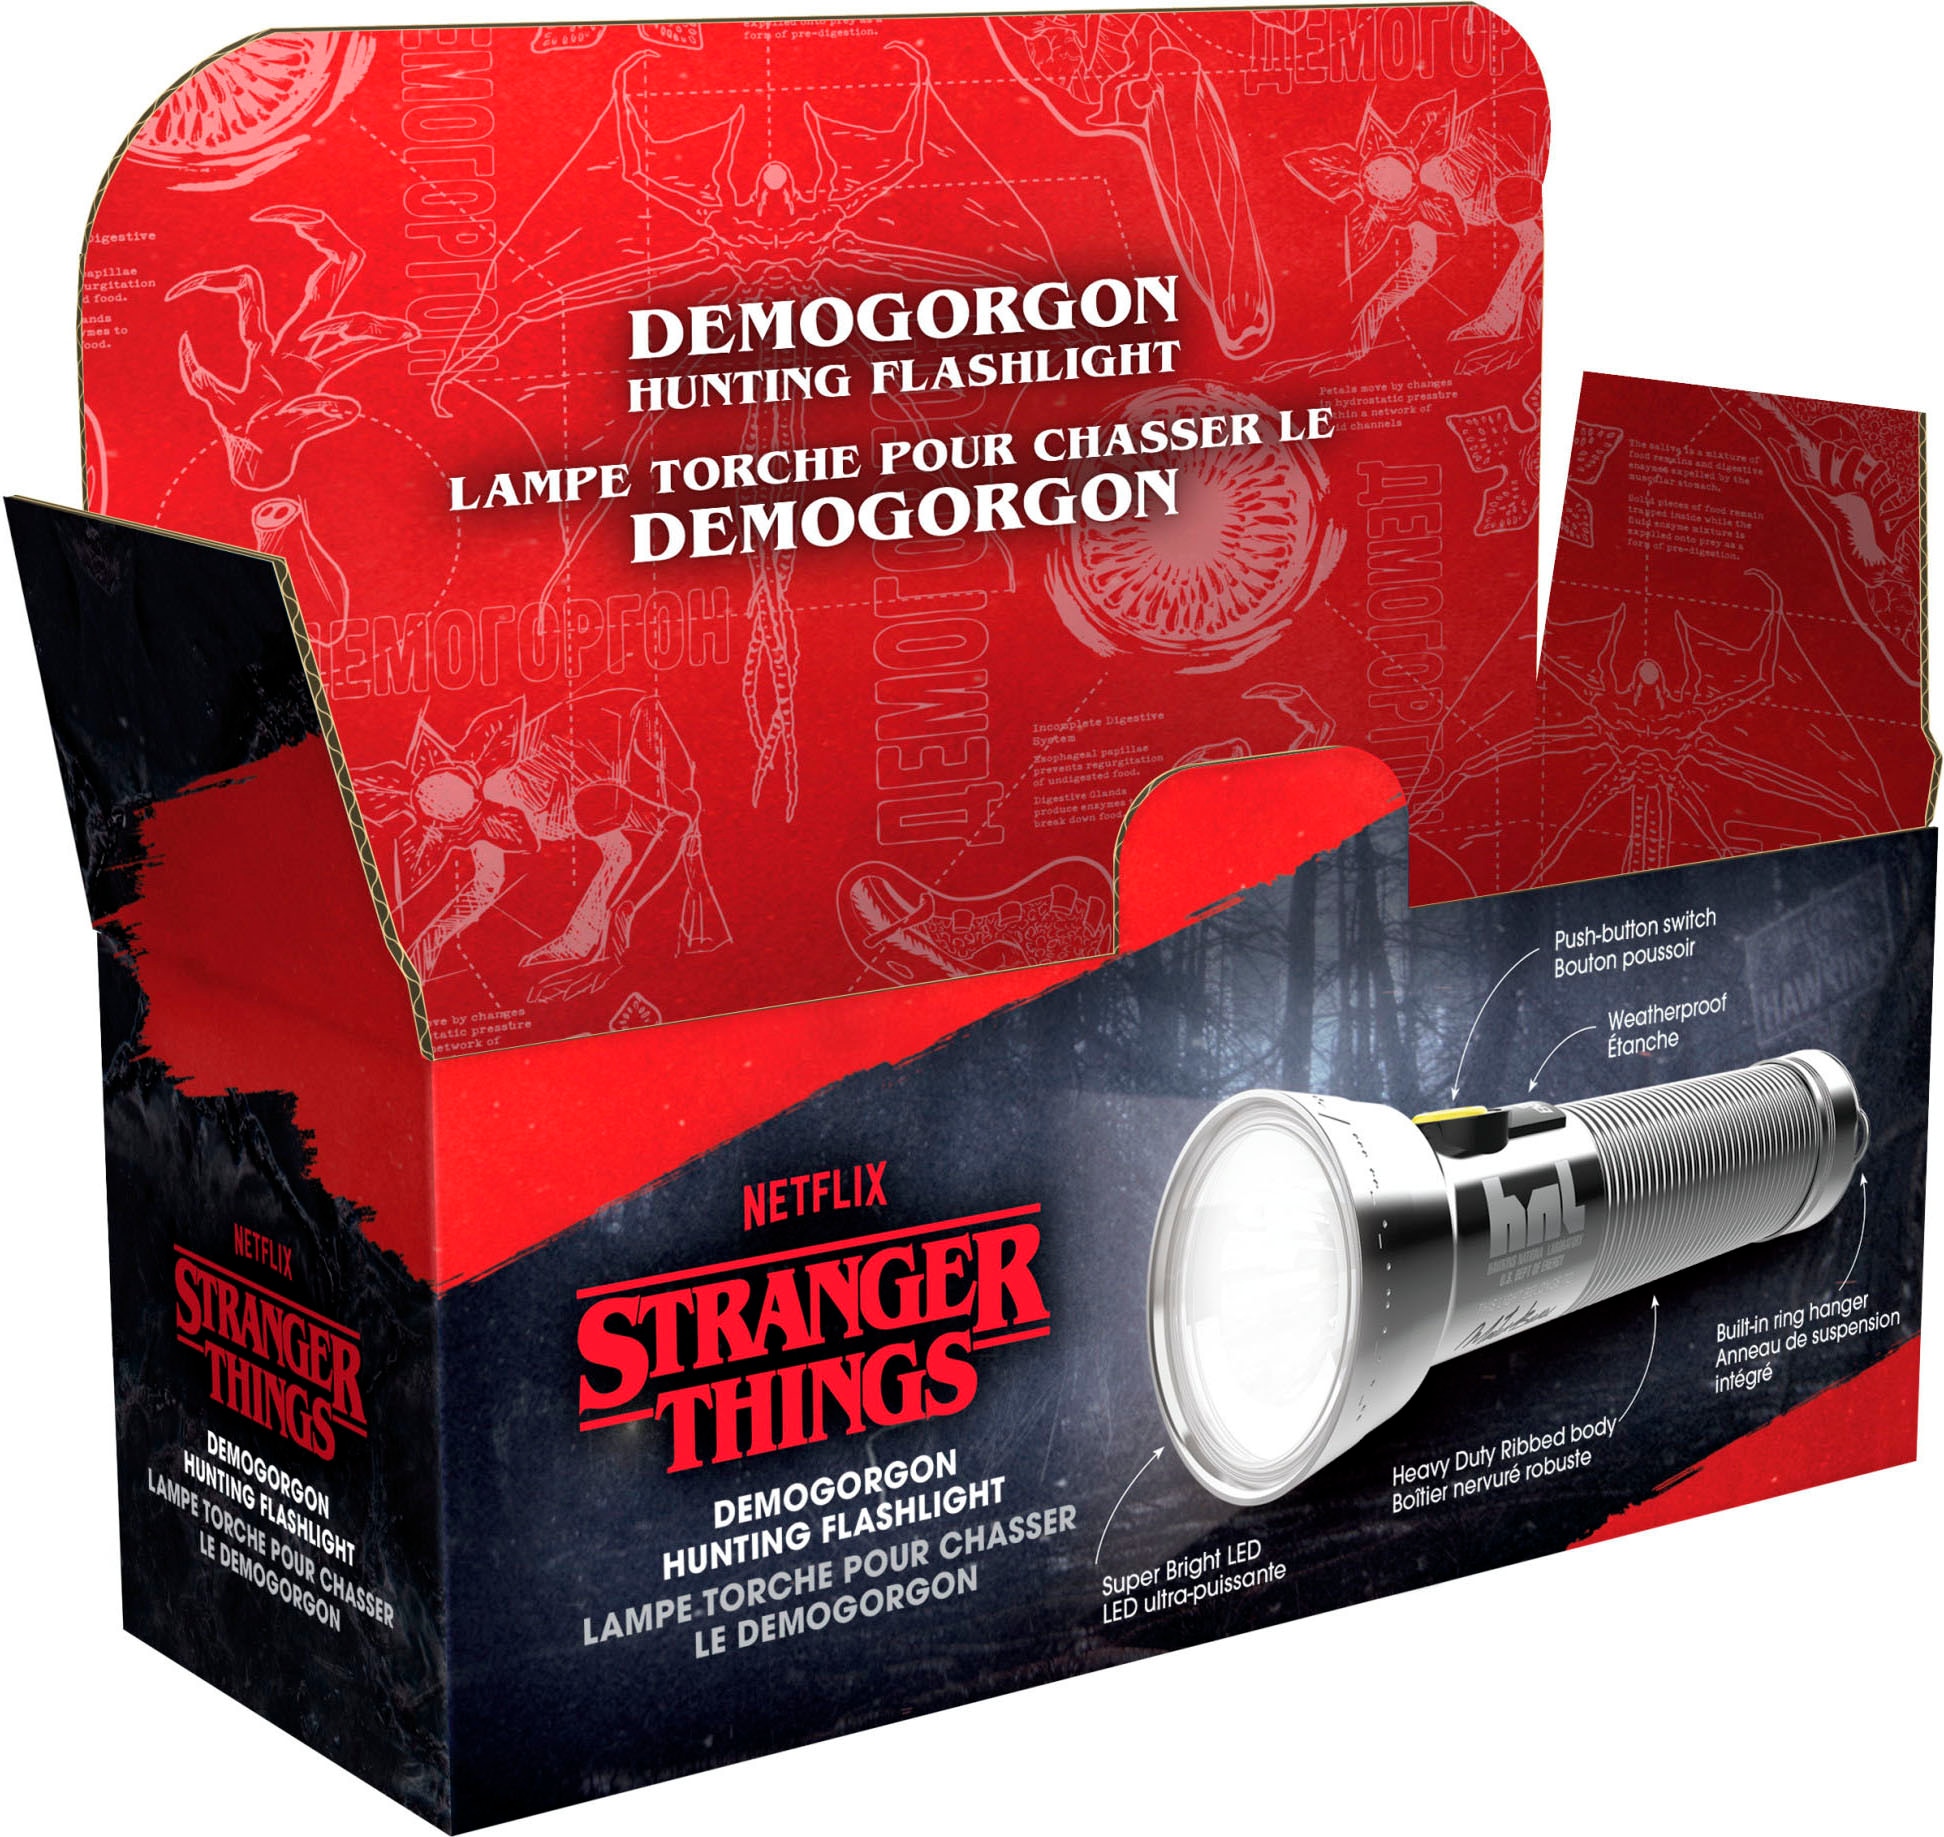 Edition Energizer Light«, limitierte Promo Taschenlampe bei »Stranger Things